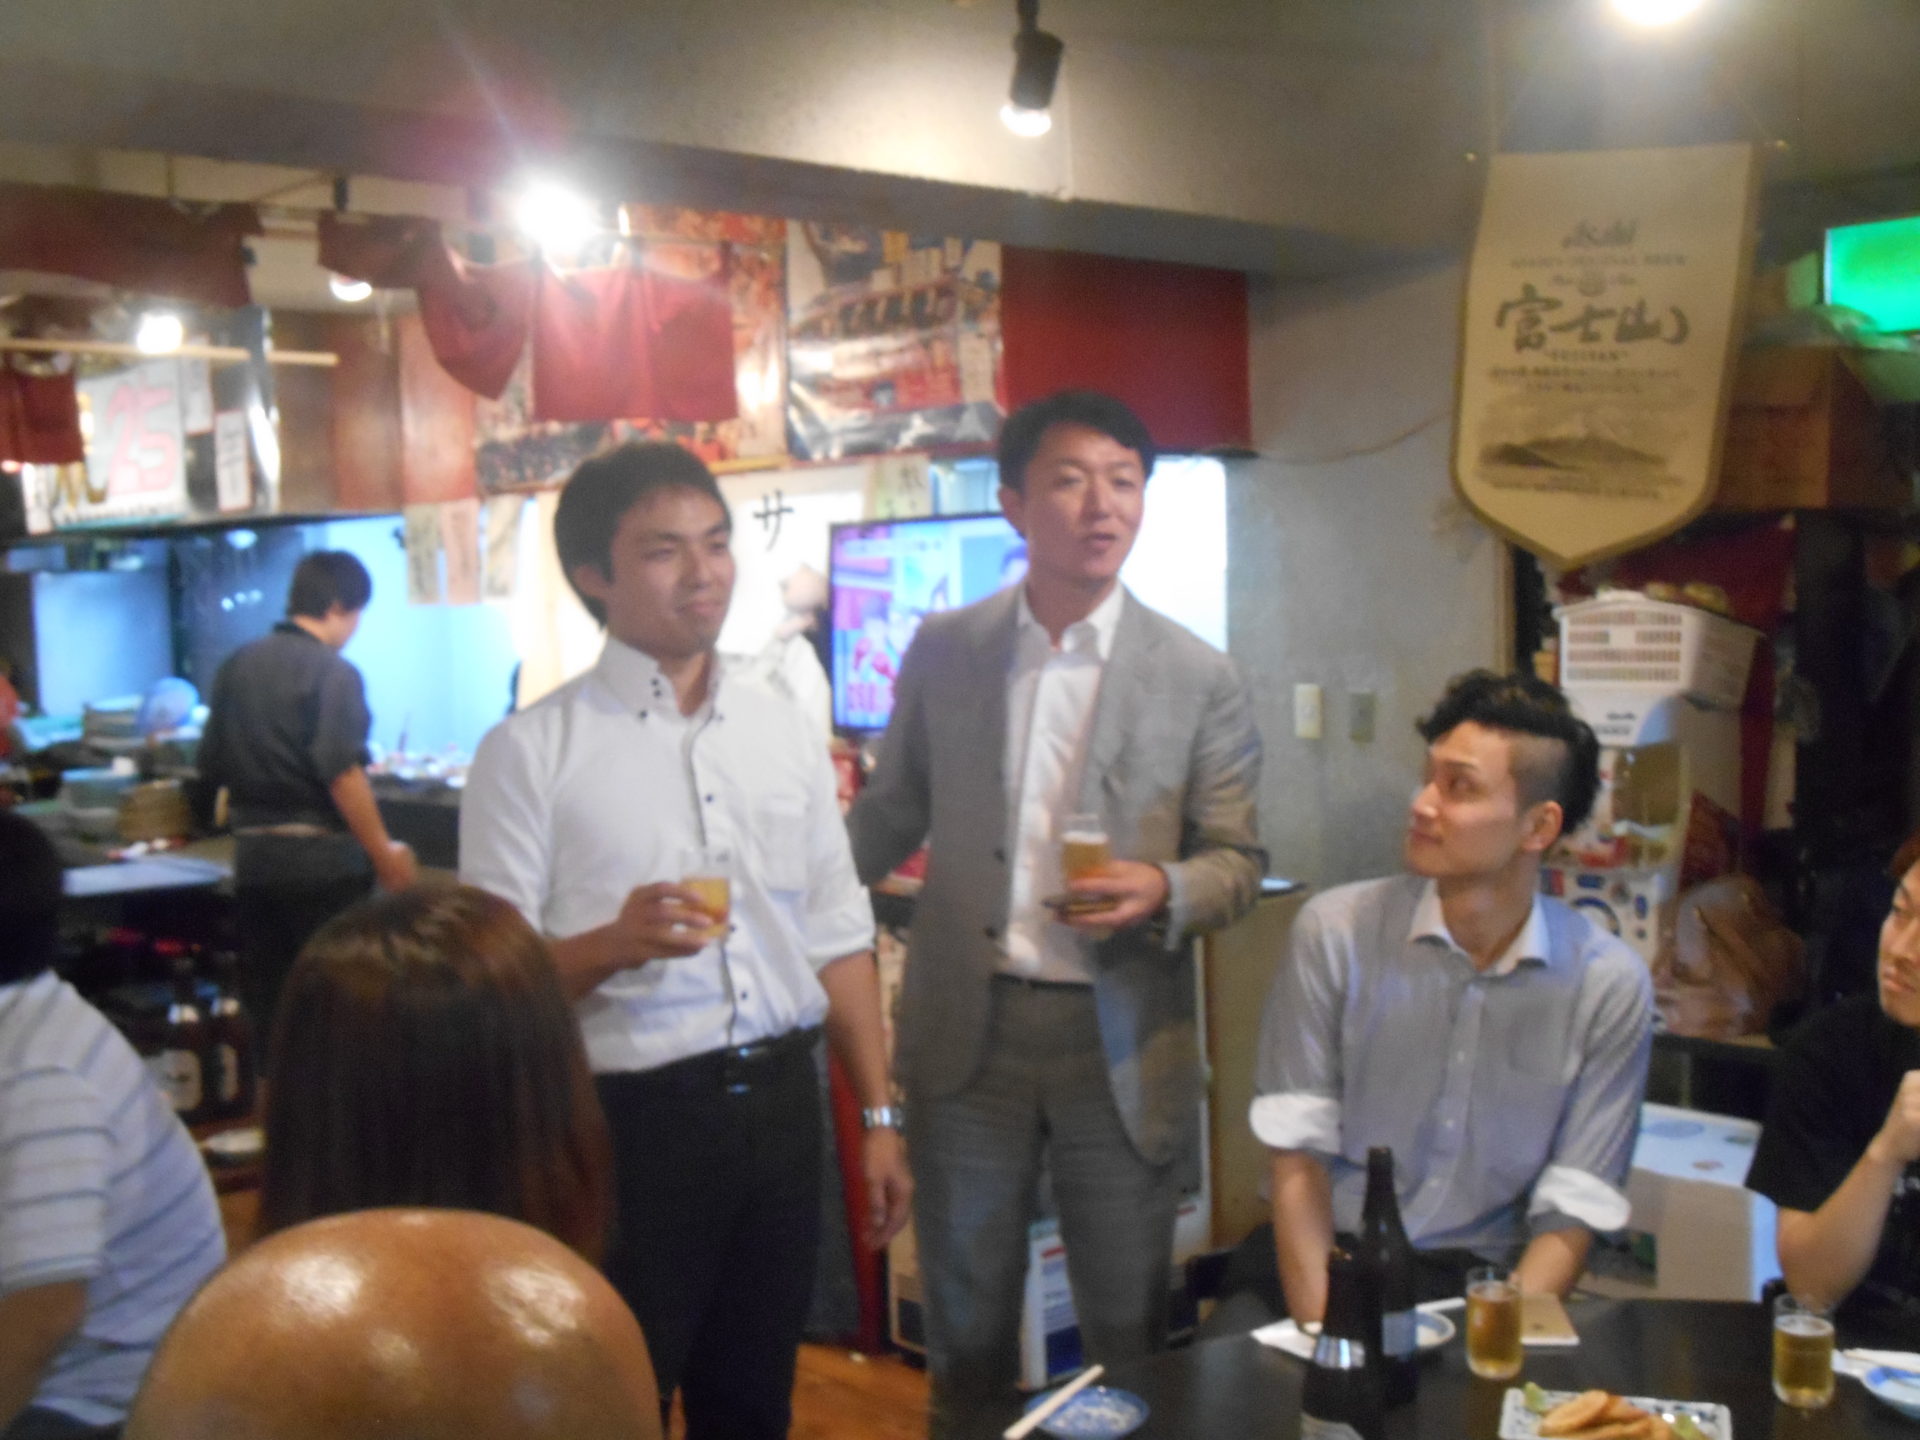 DSCN5595 1920x1440 - 2015年9月14日 AOsuki定例飲み会開催しました。